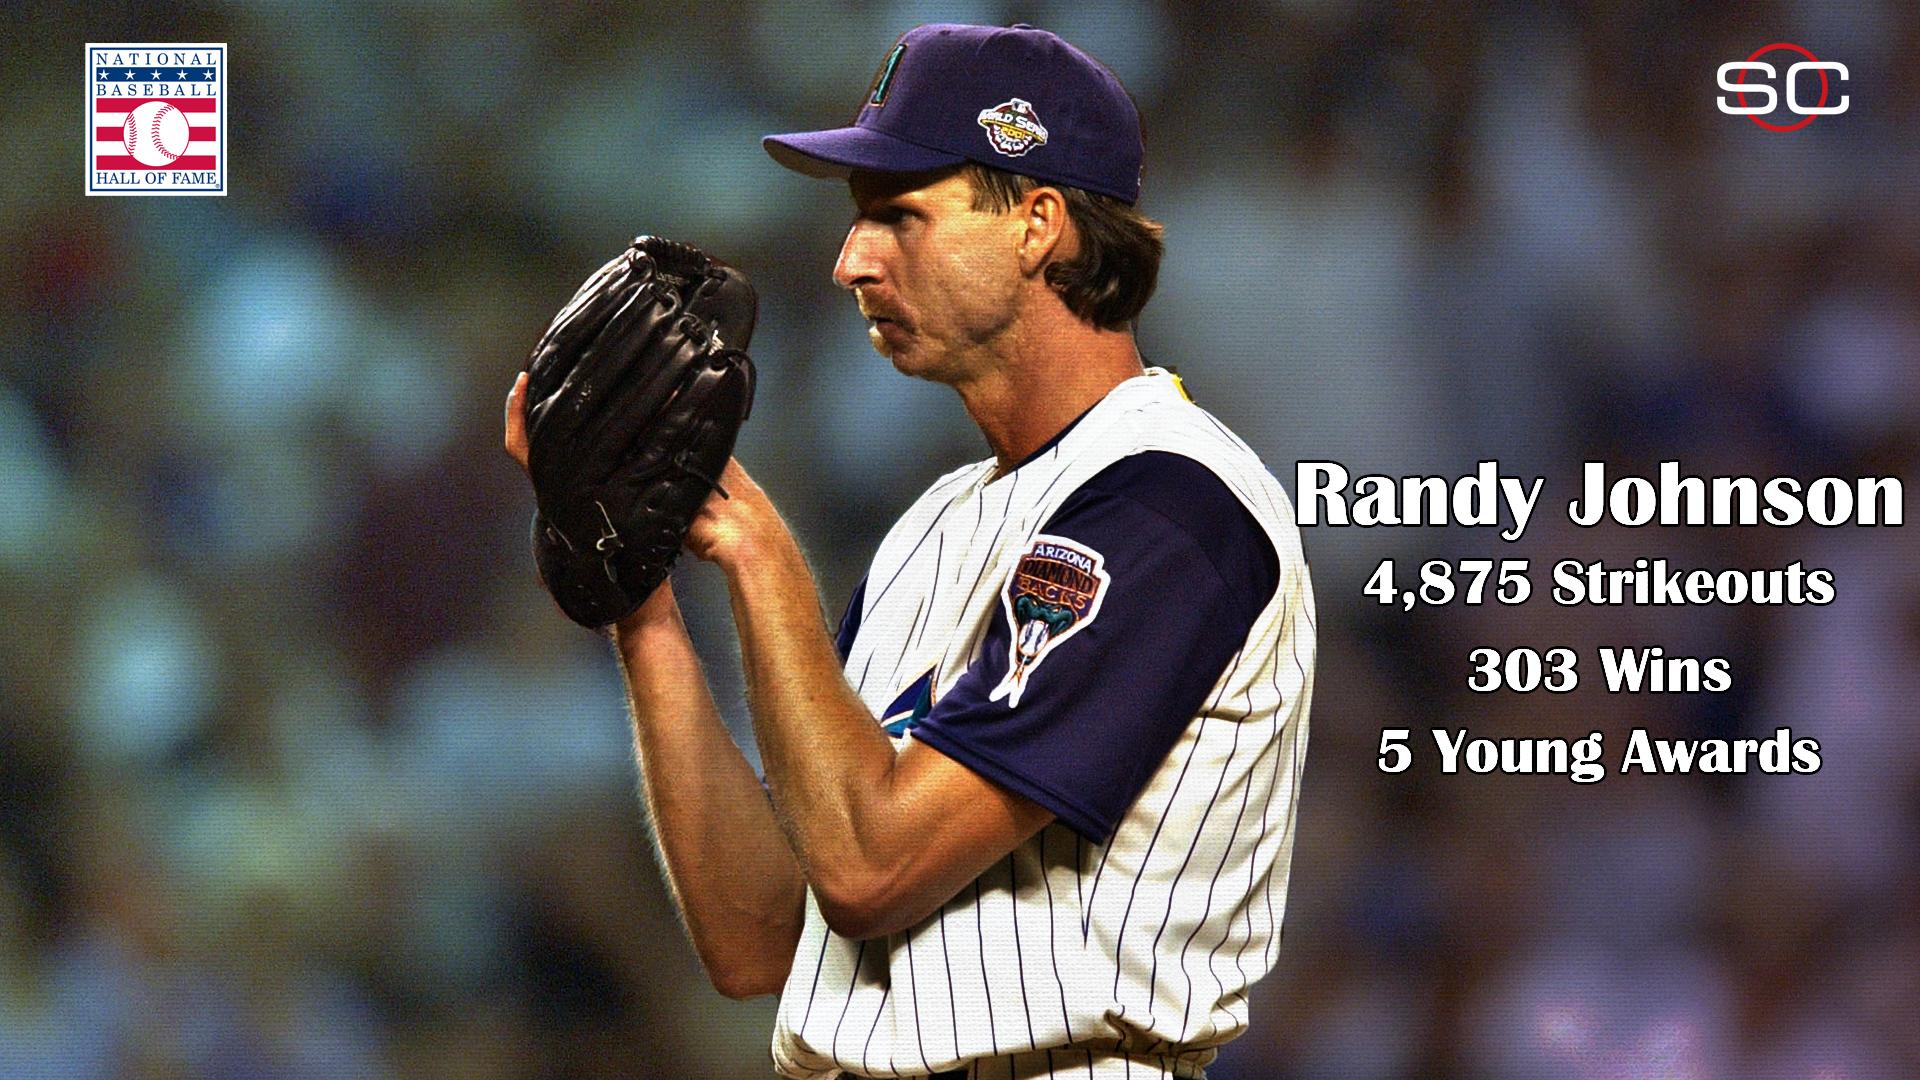 2015 Hall of Fame profile: Randy Johnson 